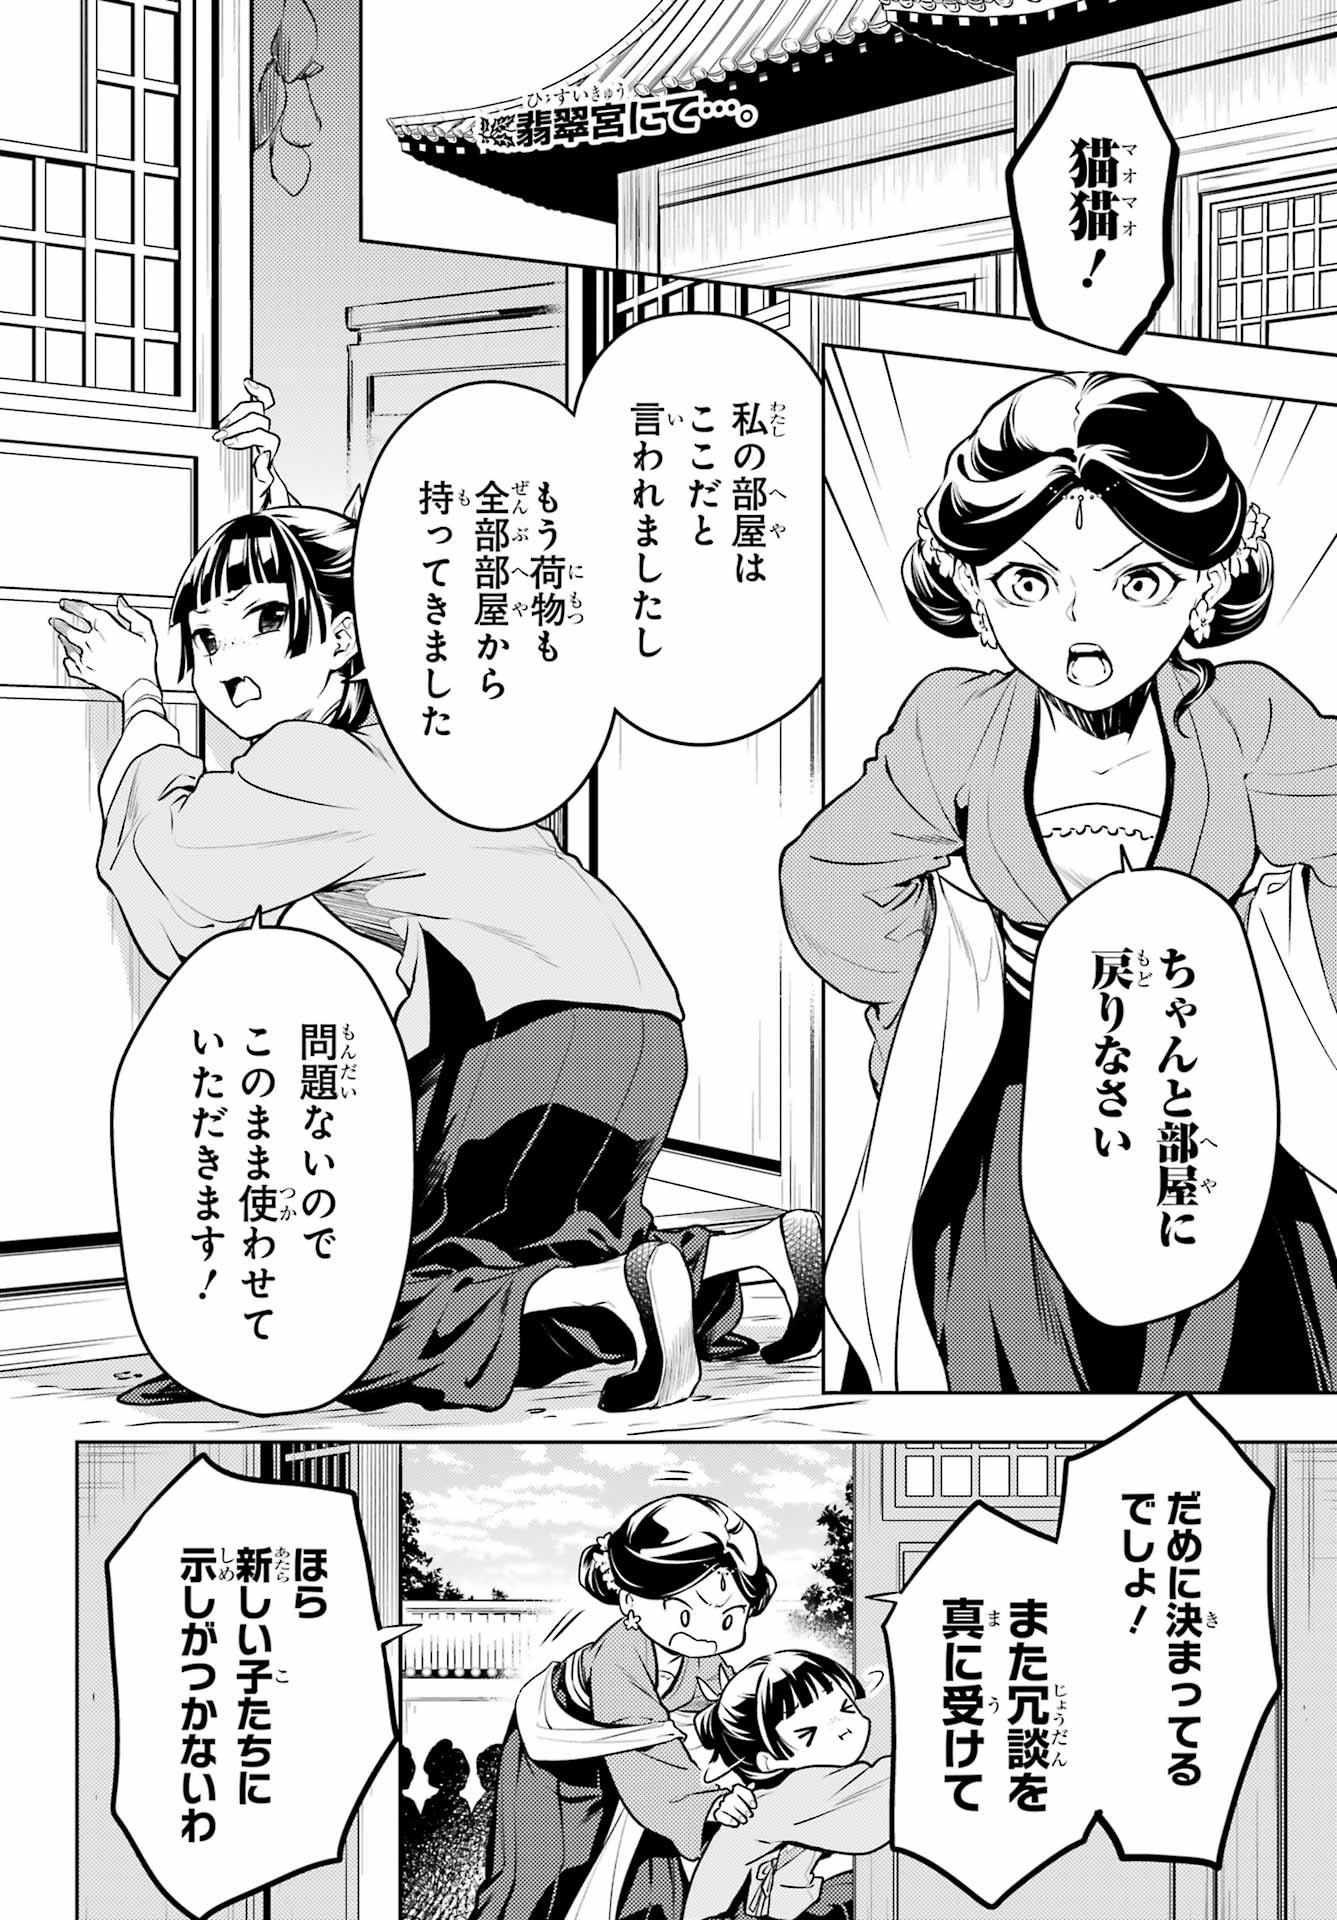 Kusuriya no Hitorigoto - Chapter 59-1 - Page 2